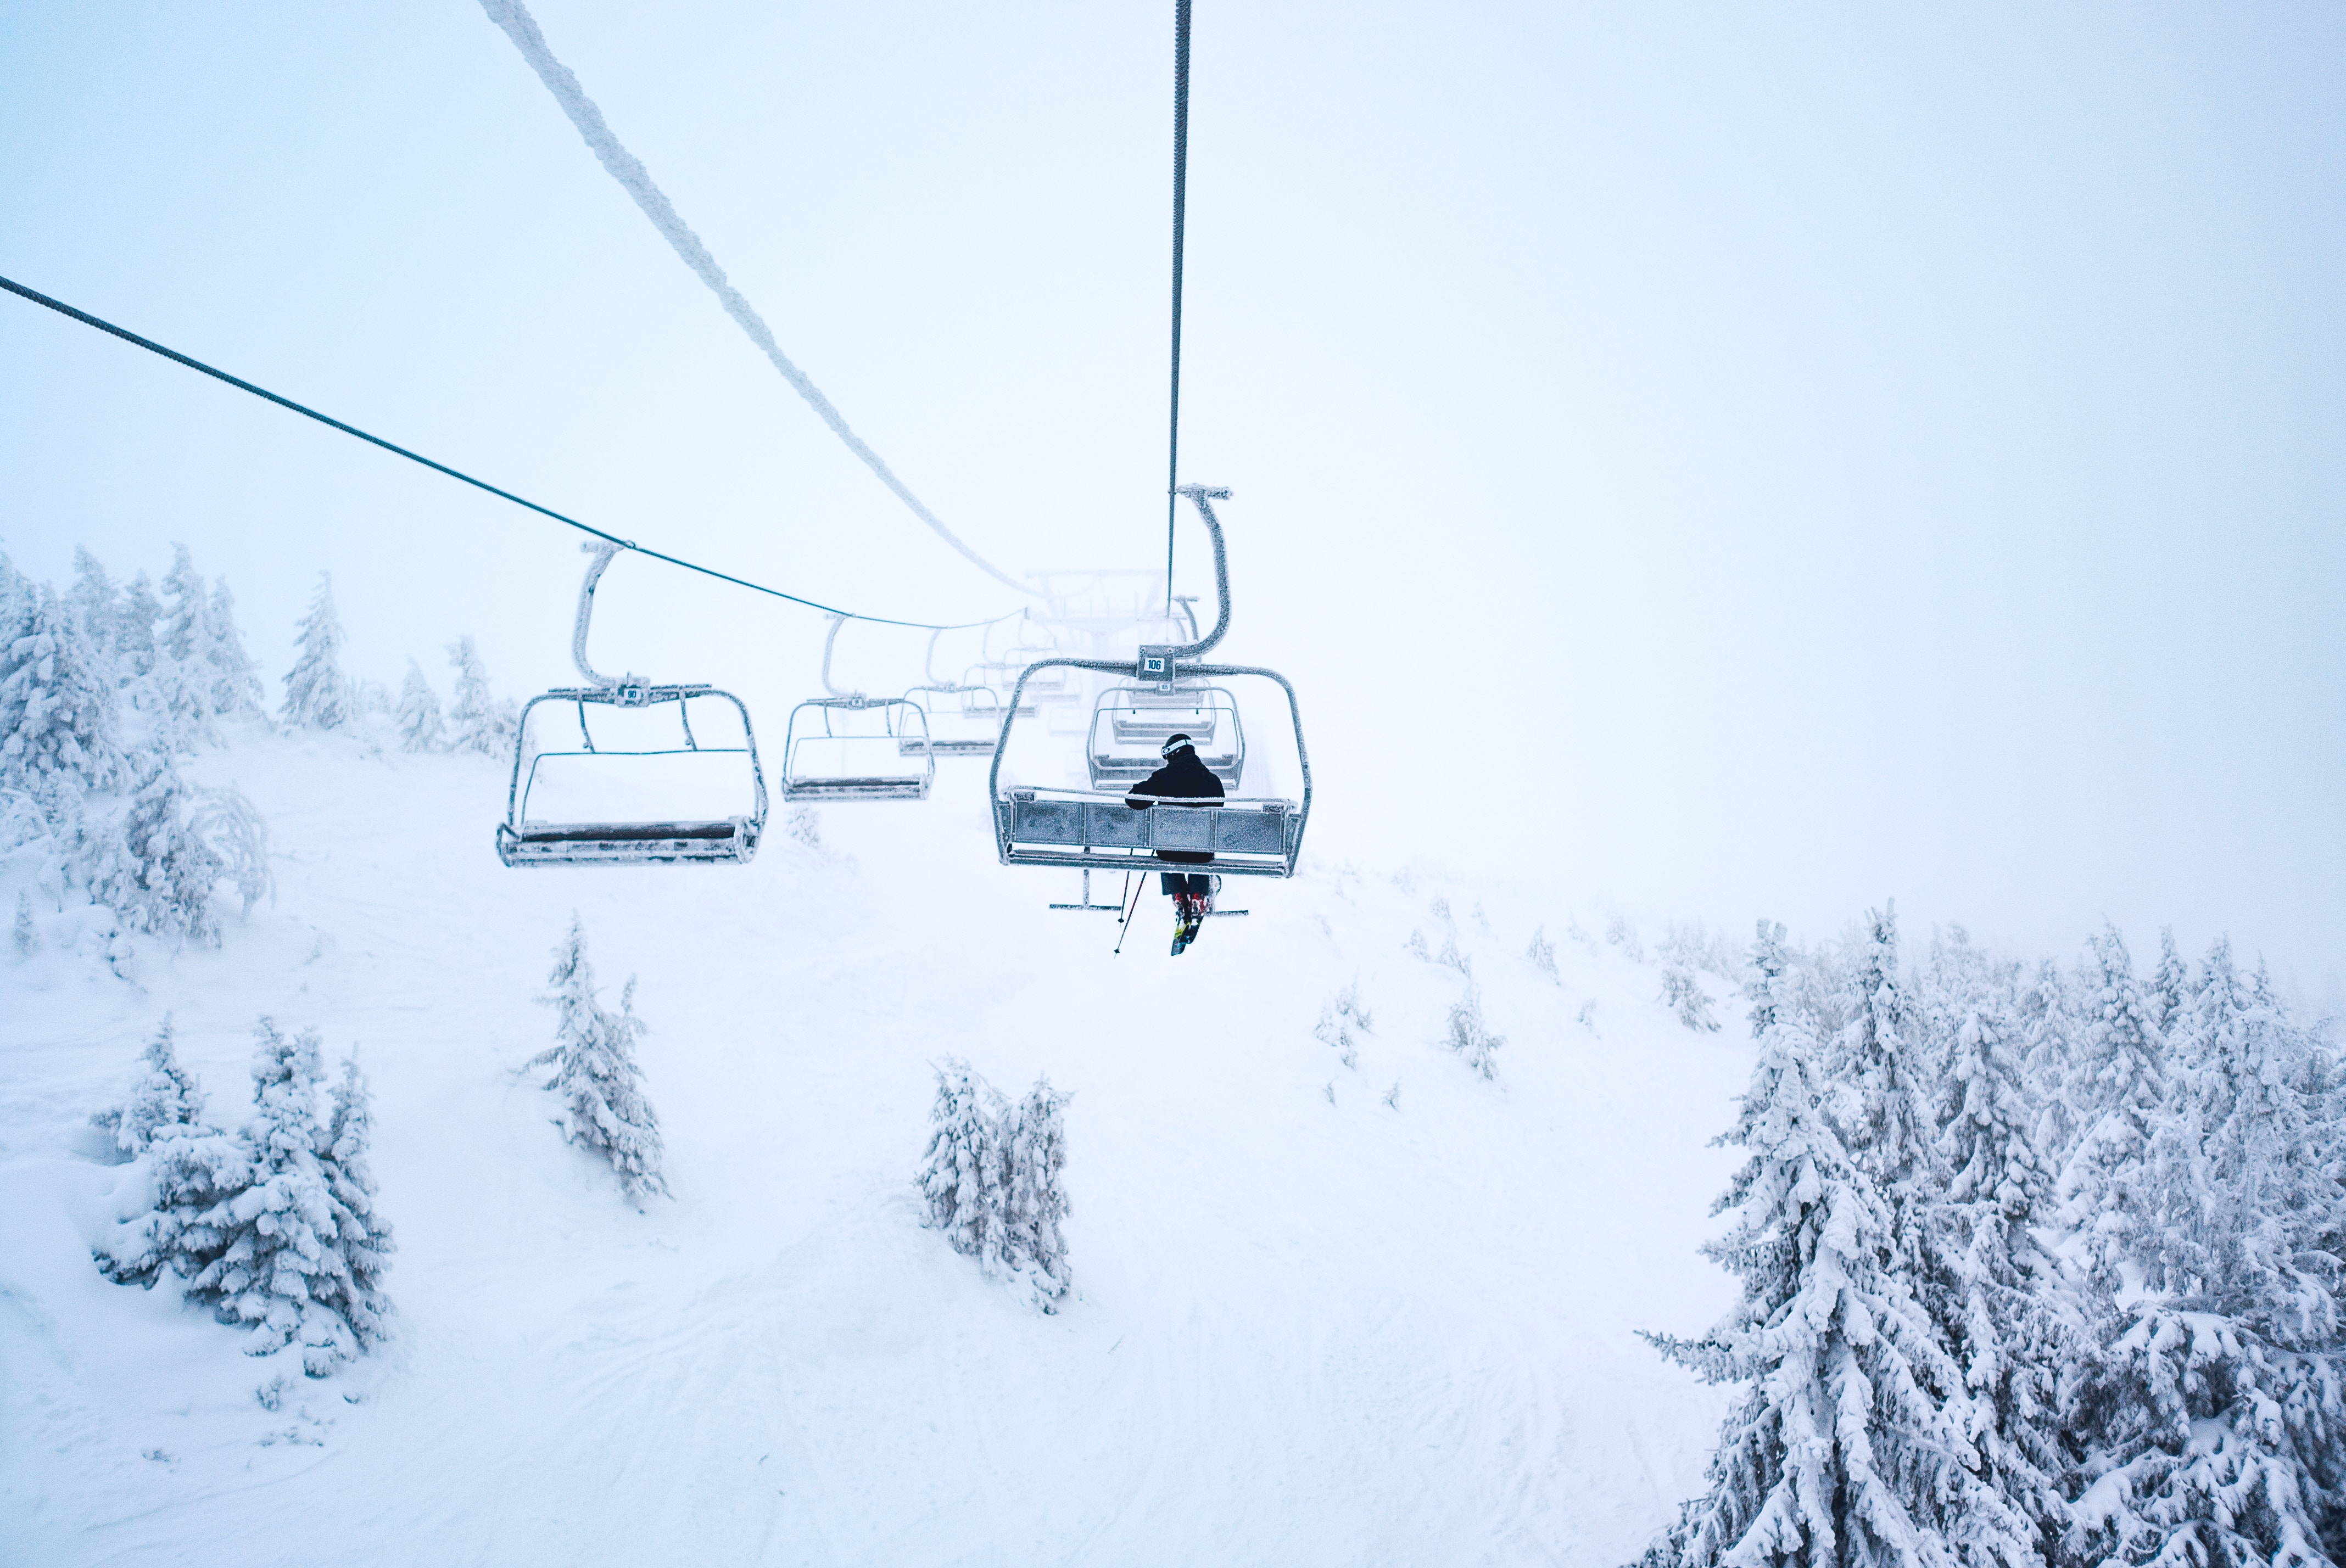 The Best Luxury Ski Destinations To Visit This Winter